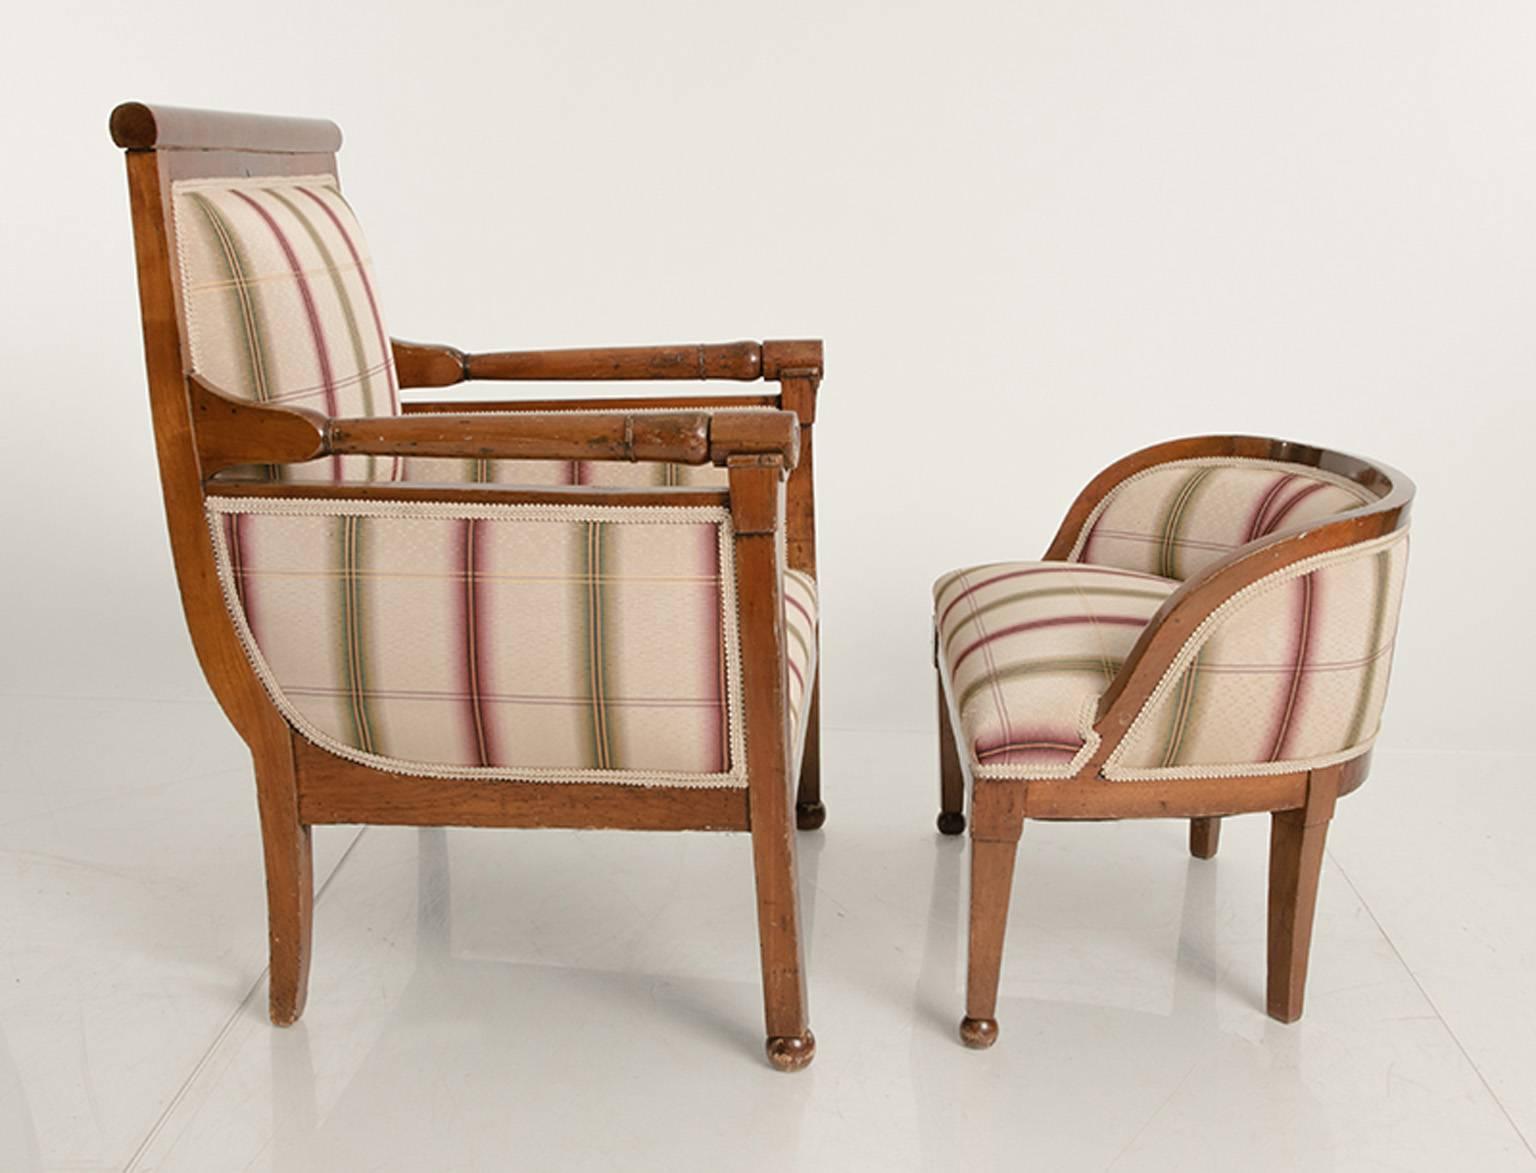 Two part Biedermeier chair and ottoman in a walnut frame.